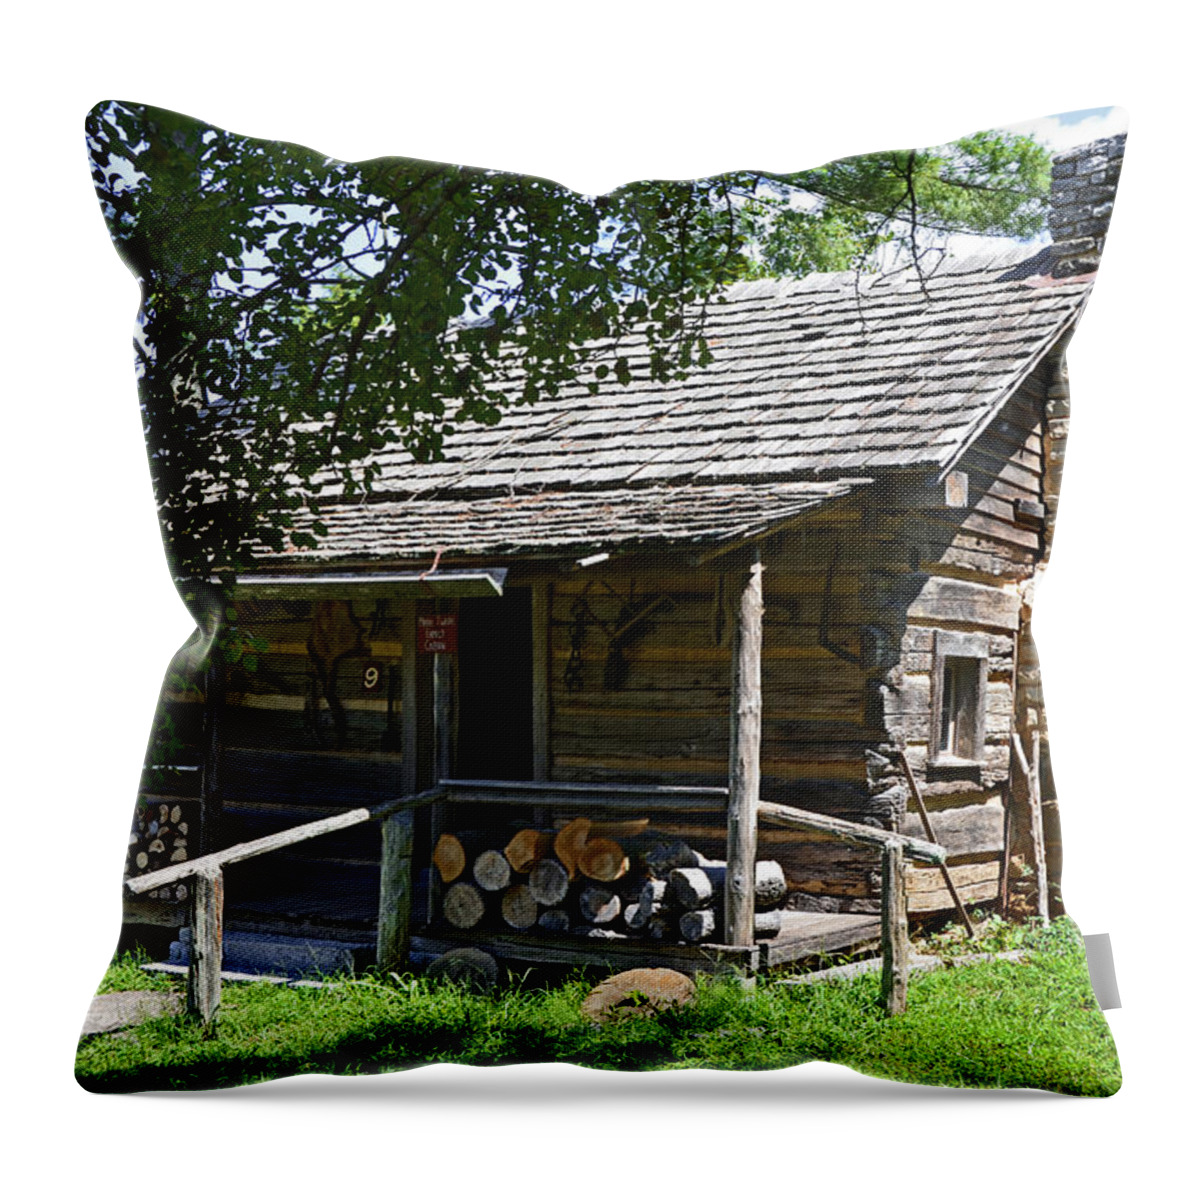 Mark Twain Throw Pillow featuring the photograph The Mark Twain Family Cabin by Paul Mashburn